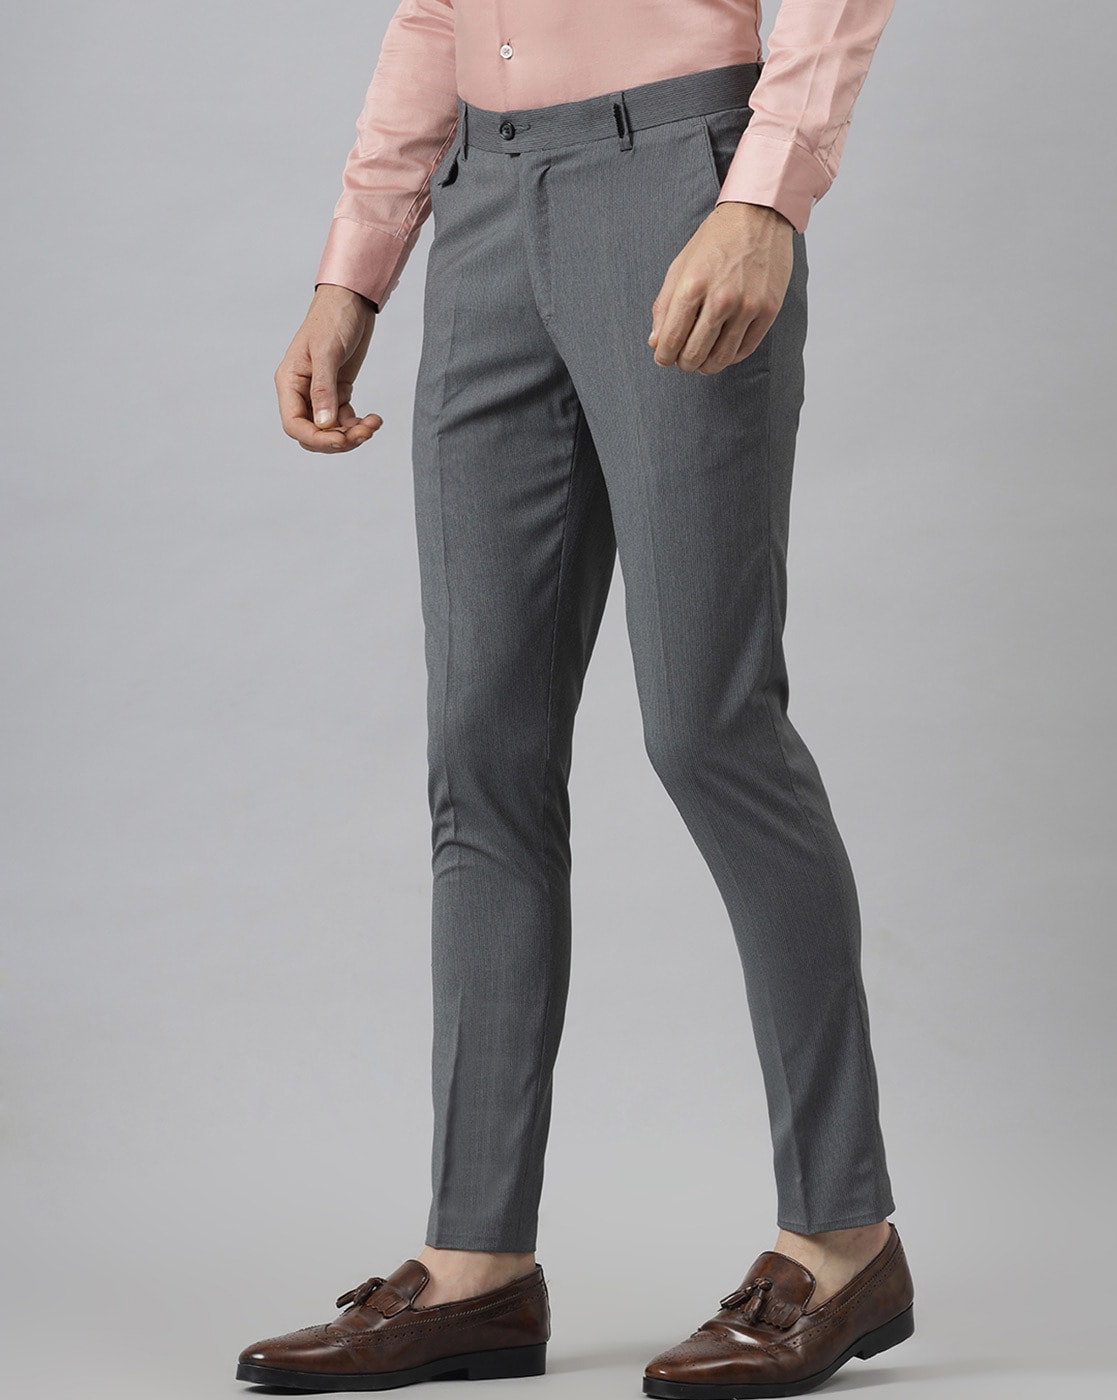 Spring Mens Dress Pants Ankle Length Business Suit Pant Casual Slim Formal  Black Trousers With Pockets Blaack Khaki Elastic Pencil Pants 28 36 201106  From Bai03, $42.71 | DHgate.Com